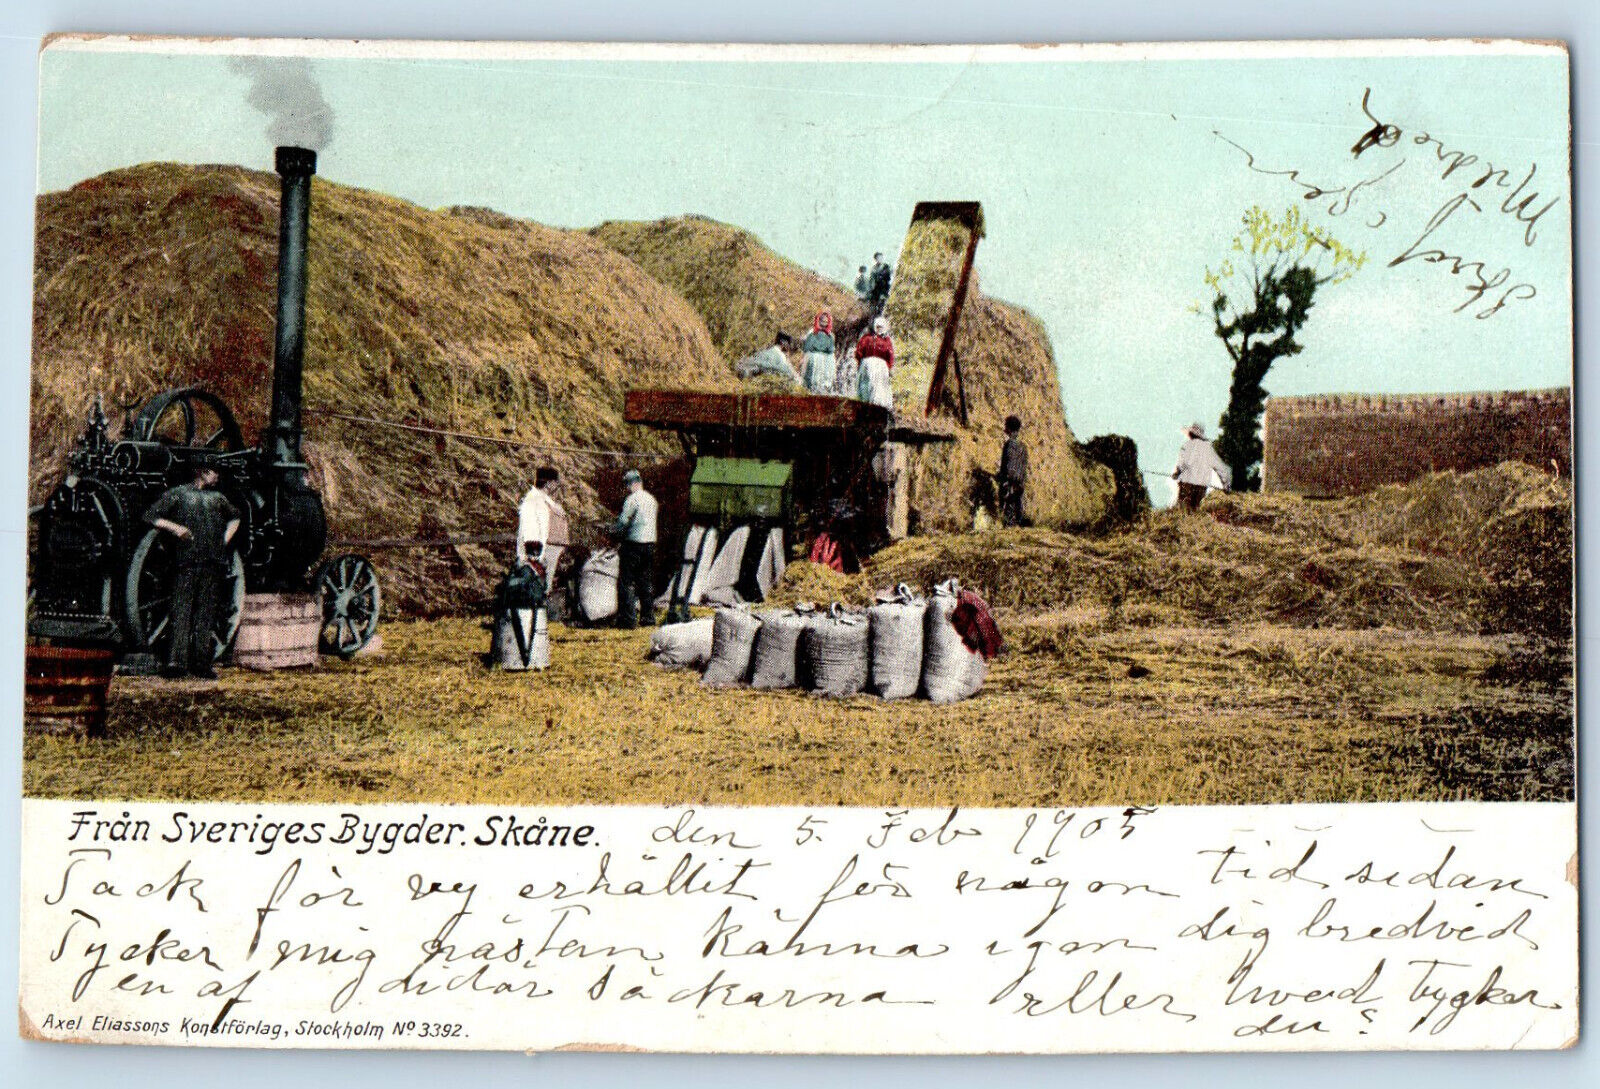 Lynn MA Scania Sweden Postcard From Sweden\'s Bygder Skane Farm Equipment 1905